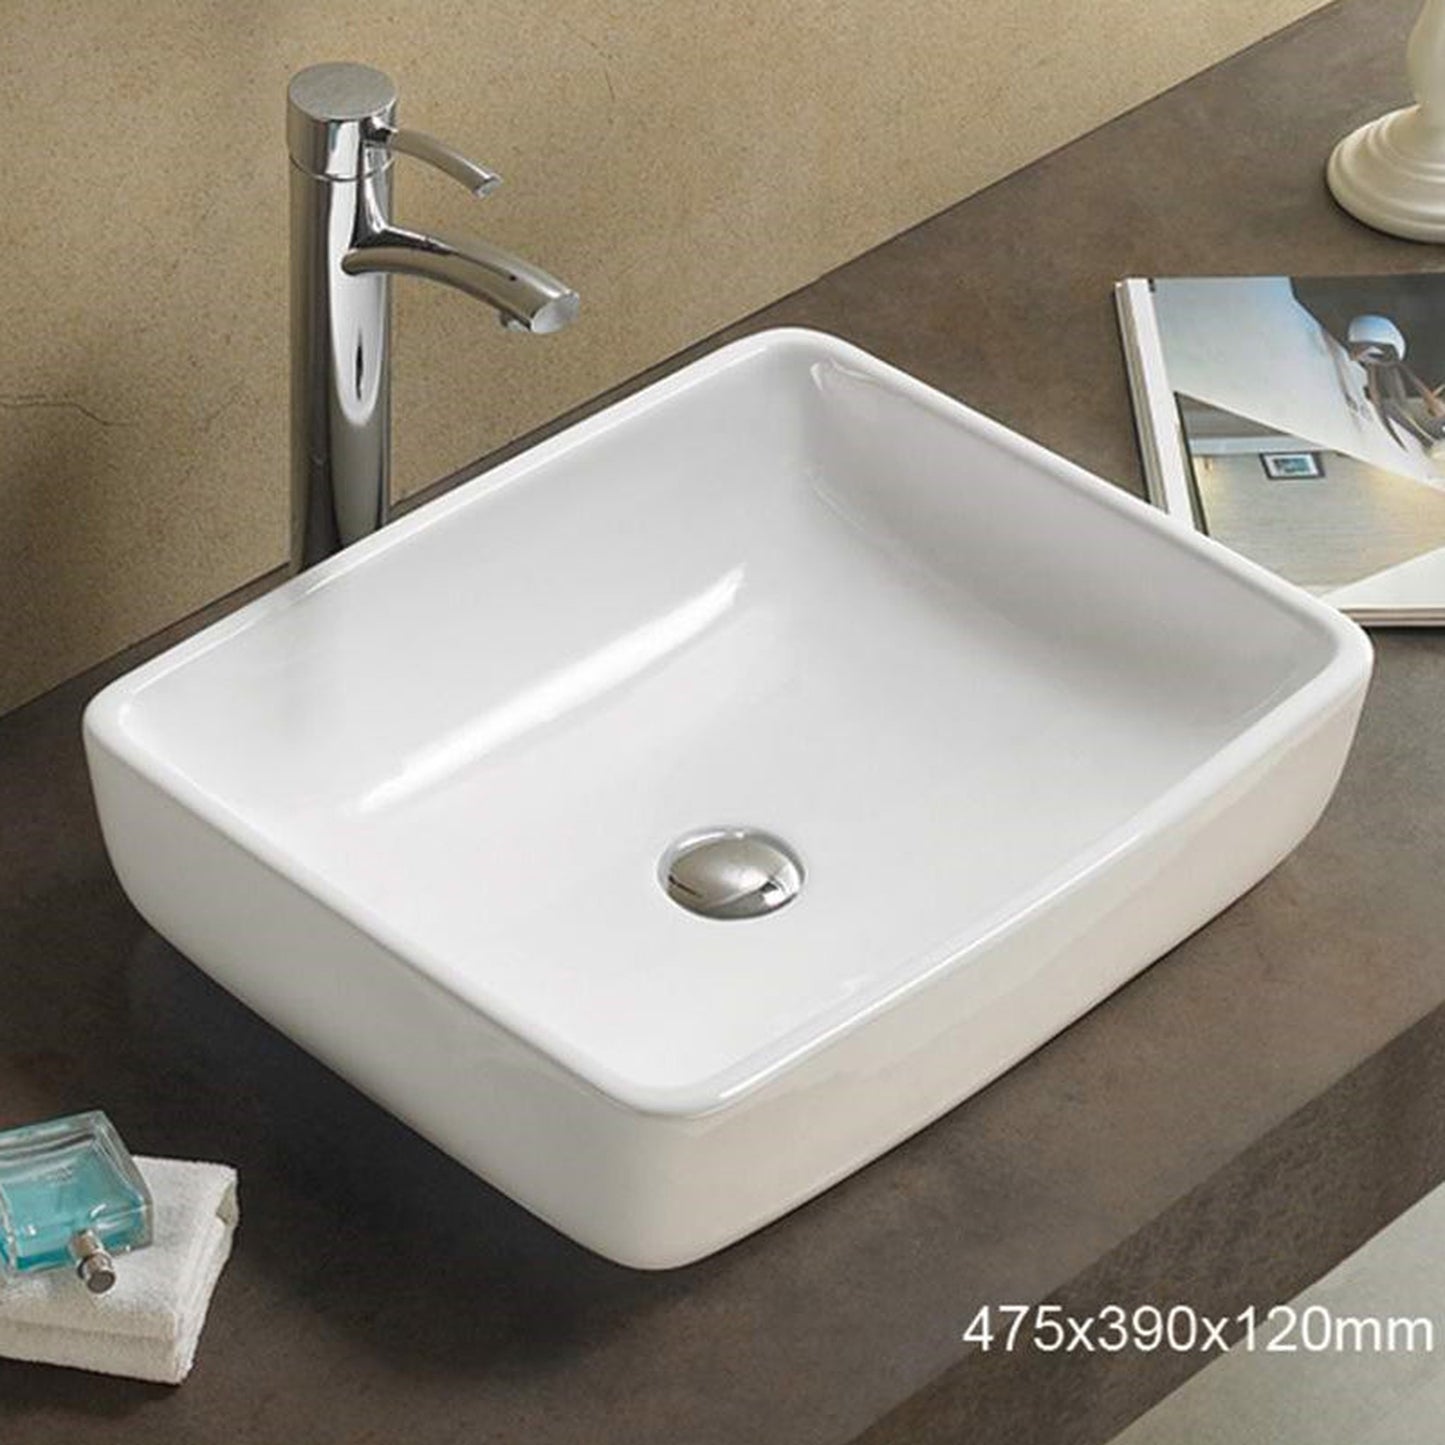 American Imaginations AI-28182 Rectangle White Ceramic Bathroom Vessel Sink with Enamel Glaze Finish